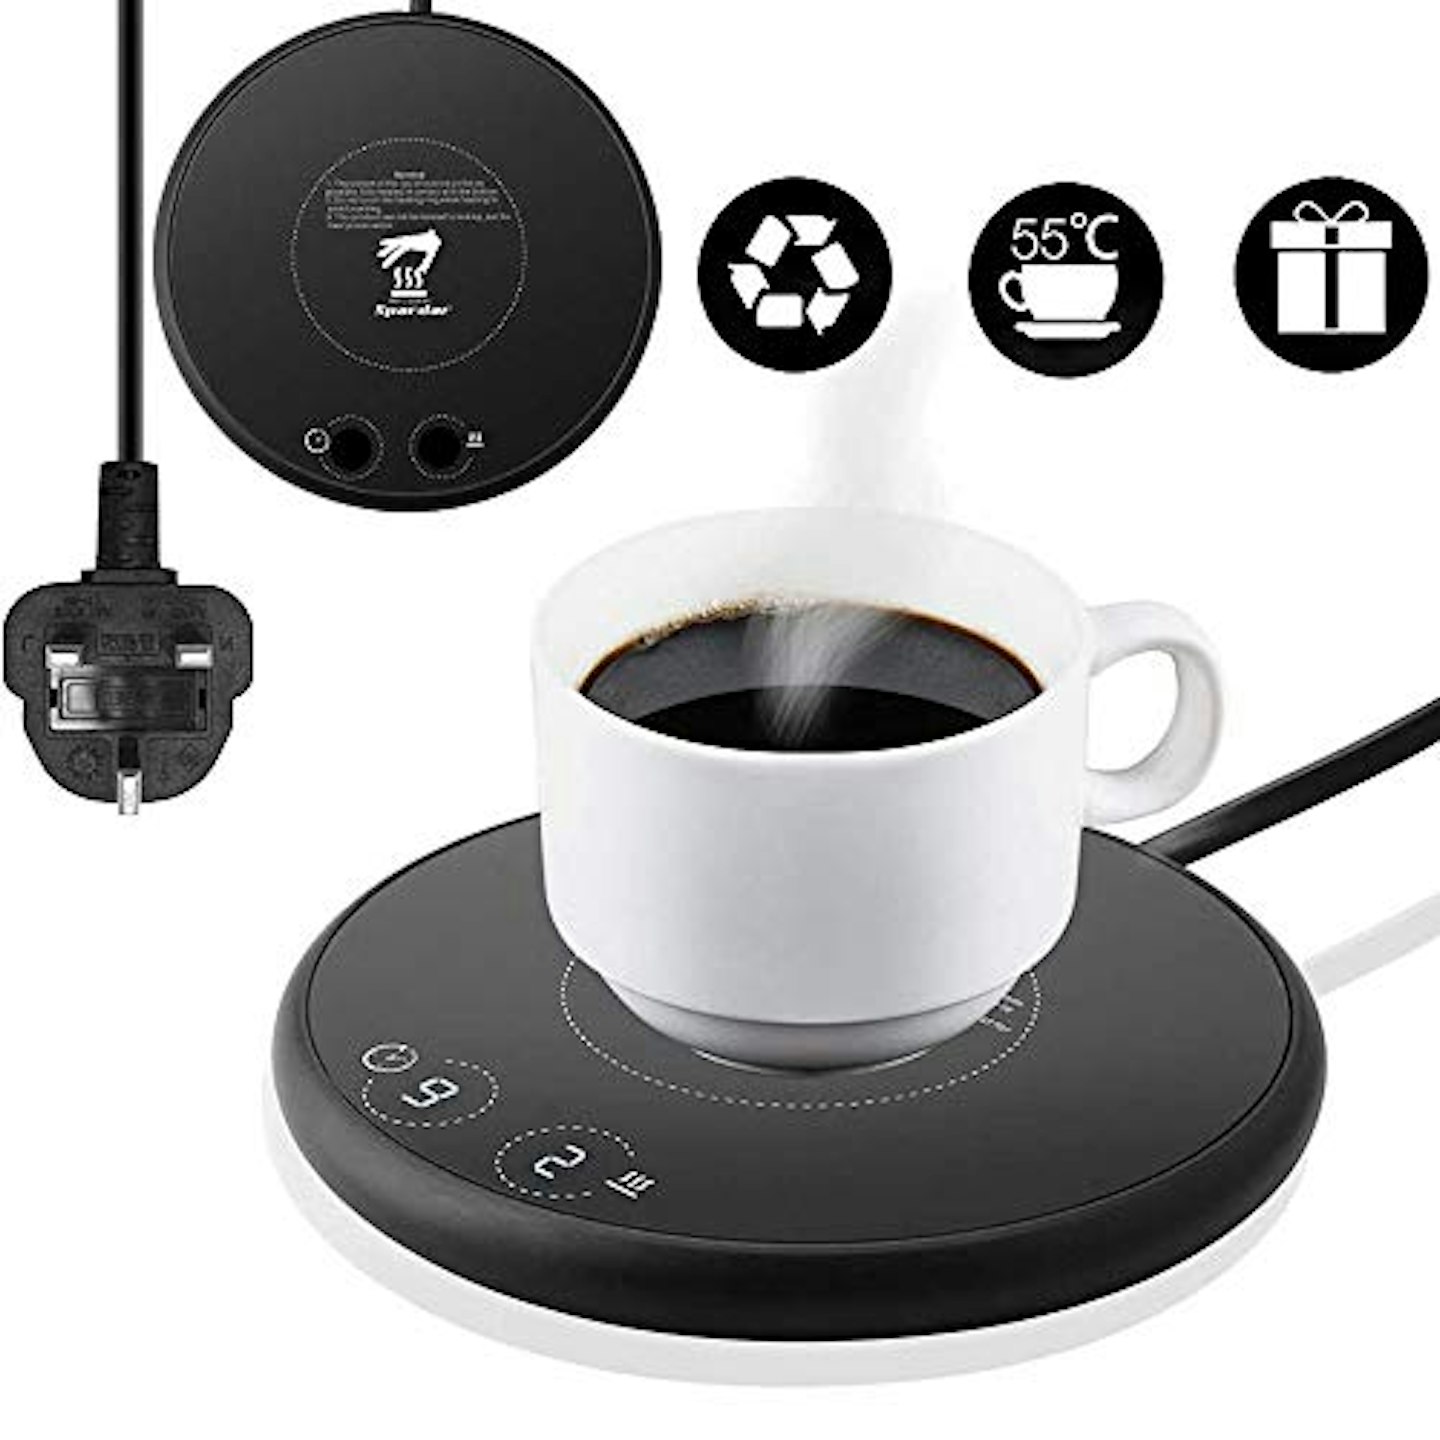 Coffee Mug Warmer Cup Warmer: Smart Electric Beverage Warmers for